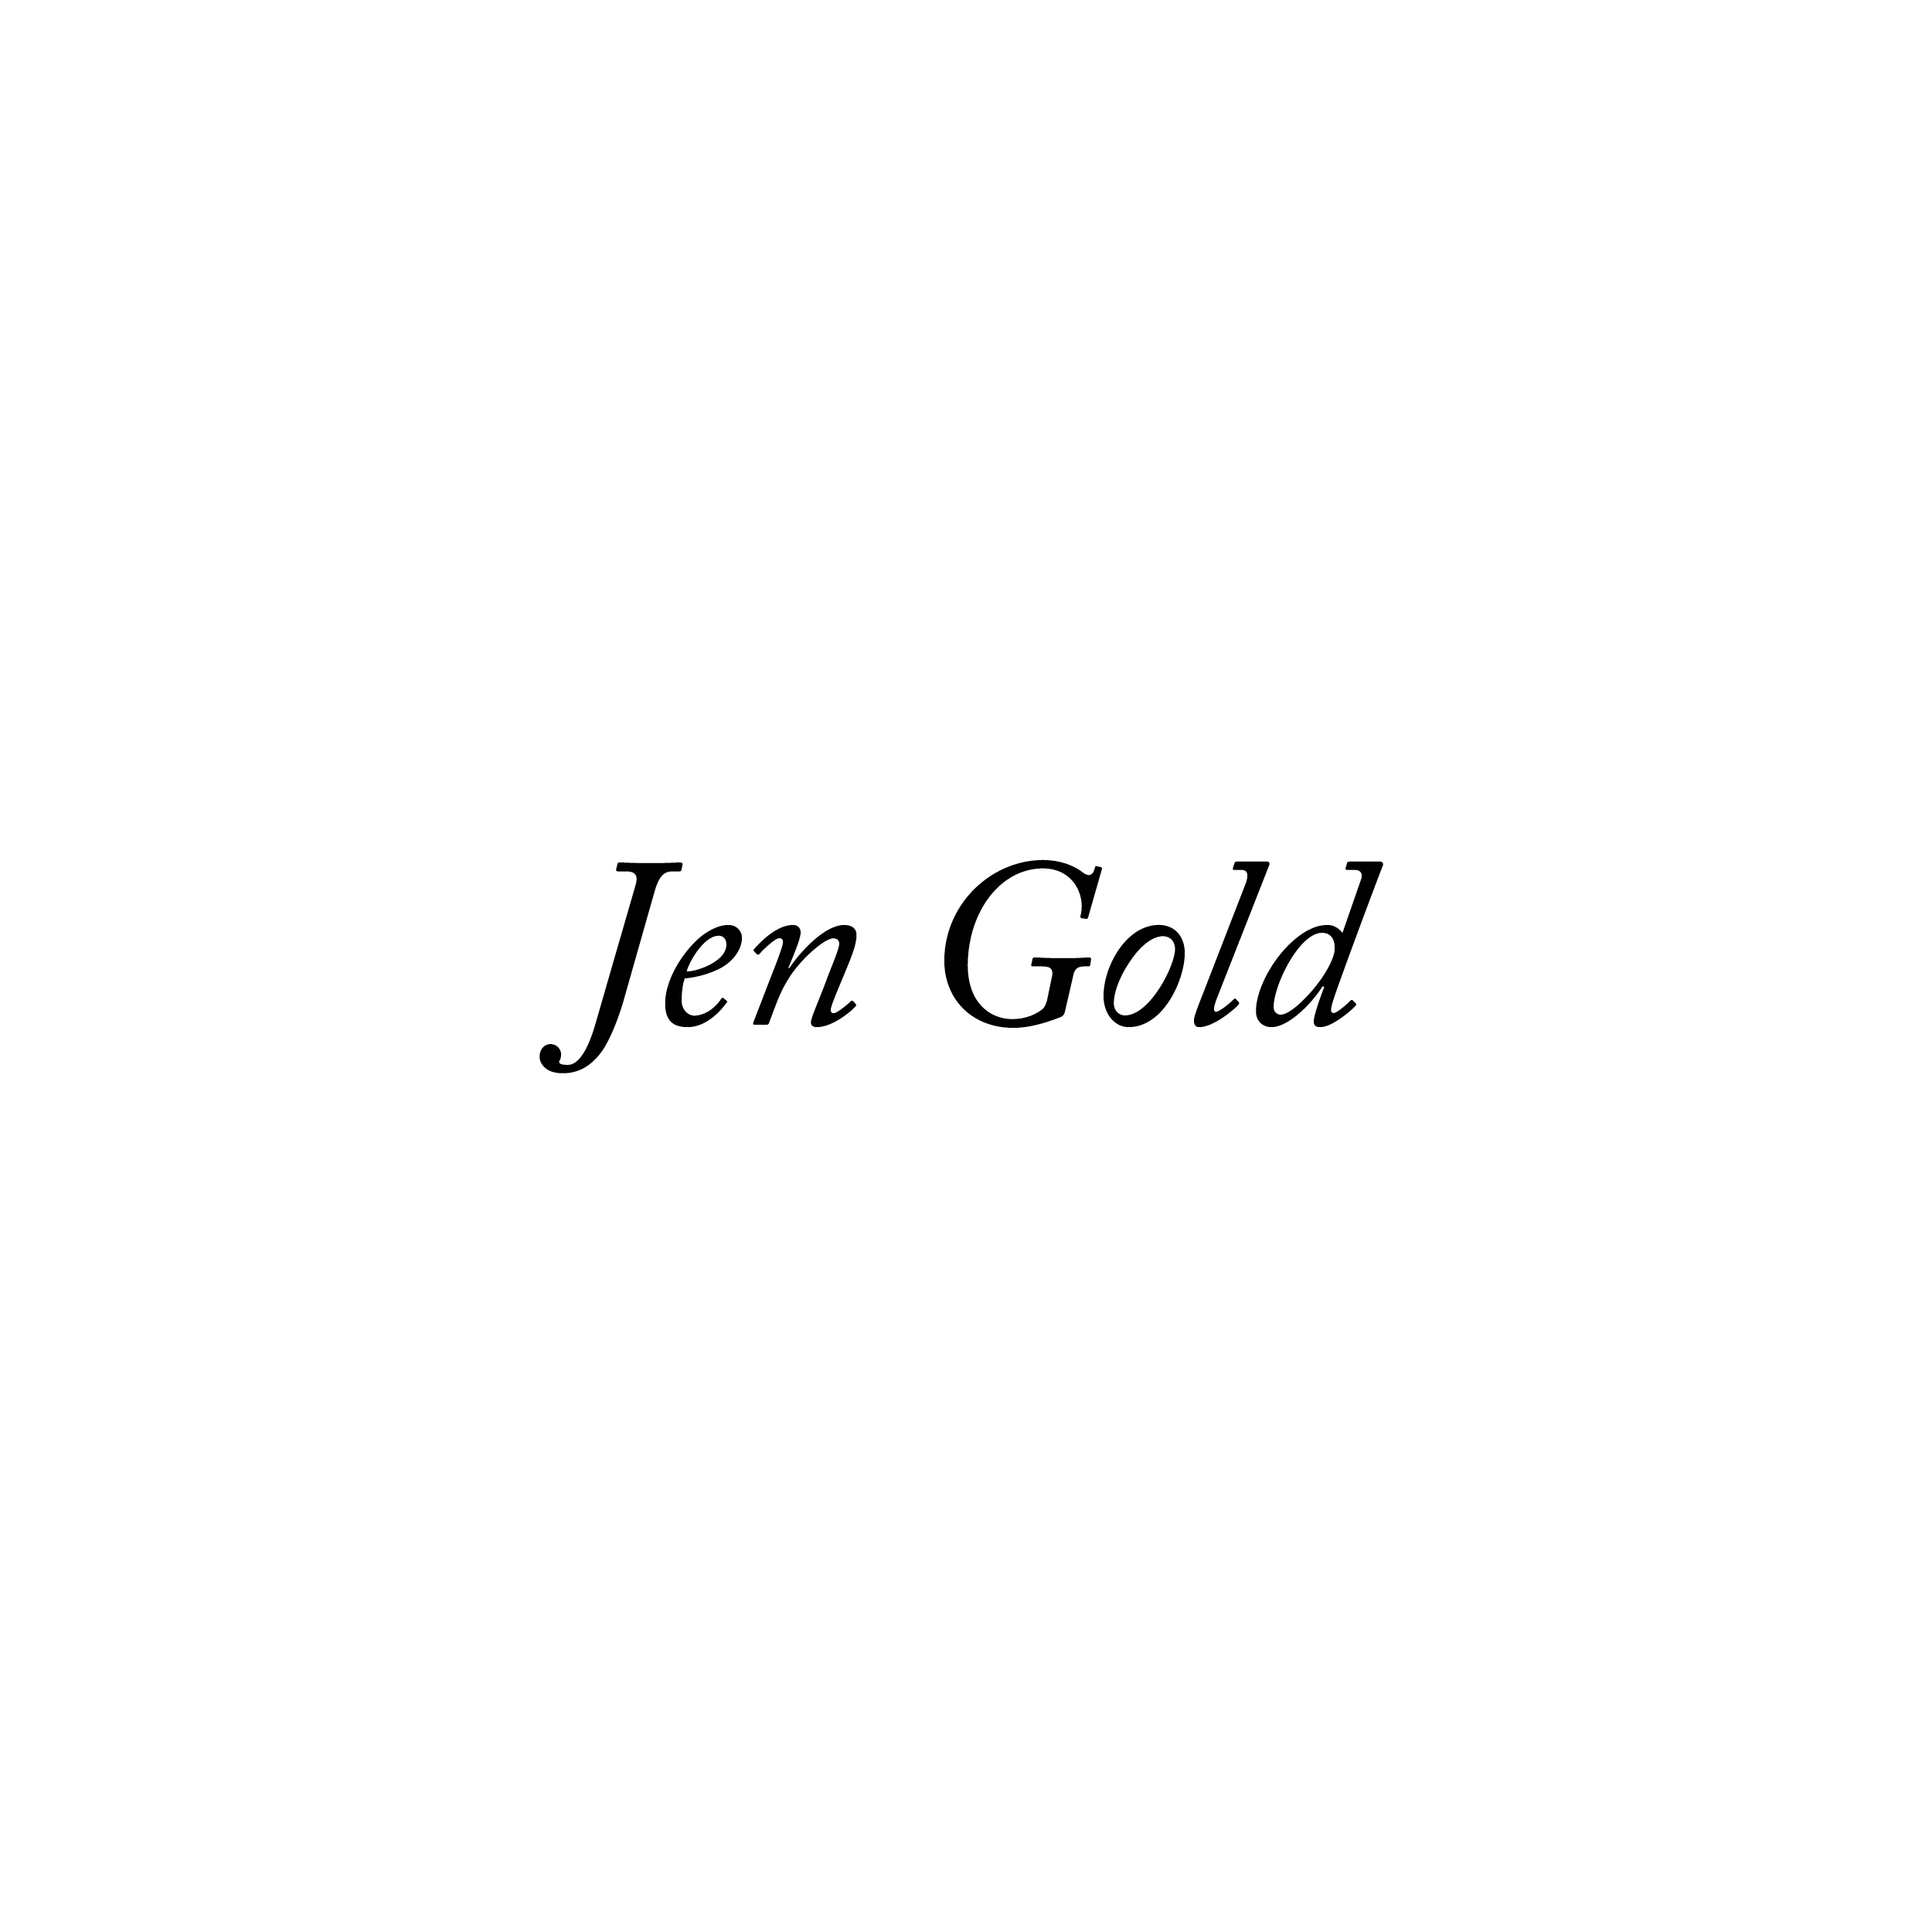 Jen Gold